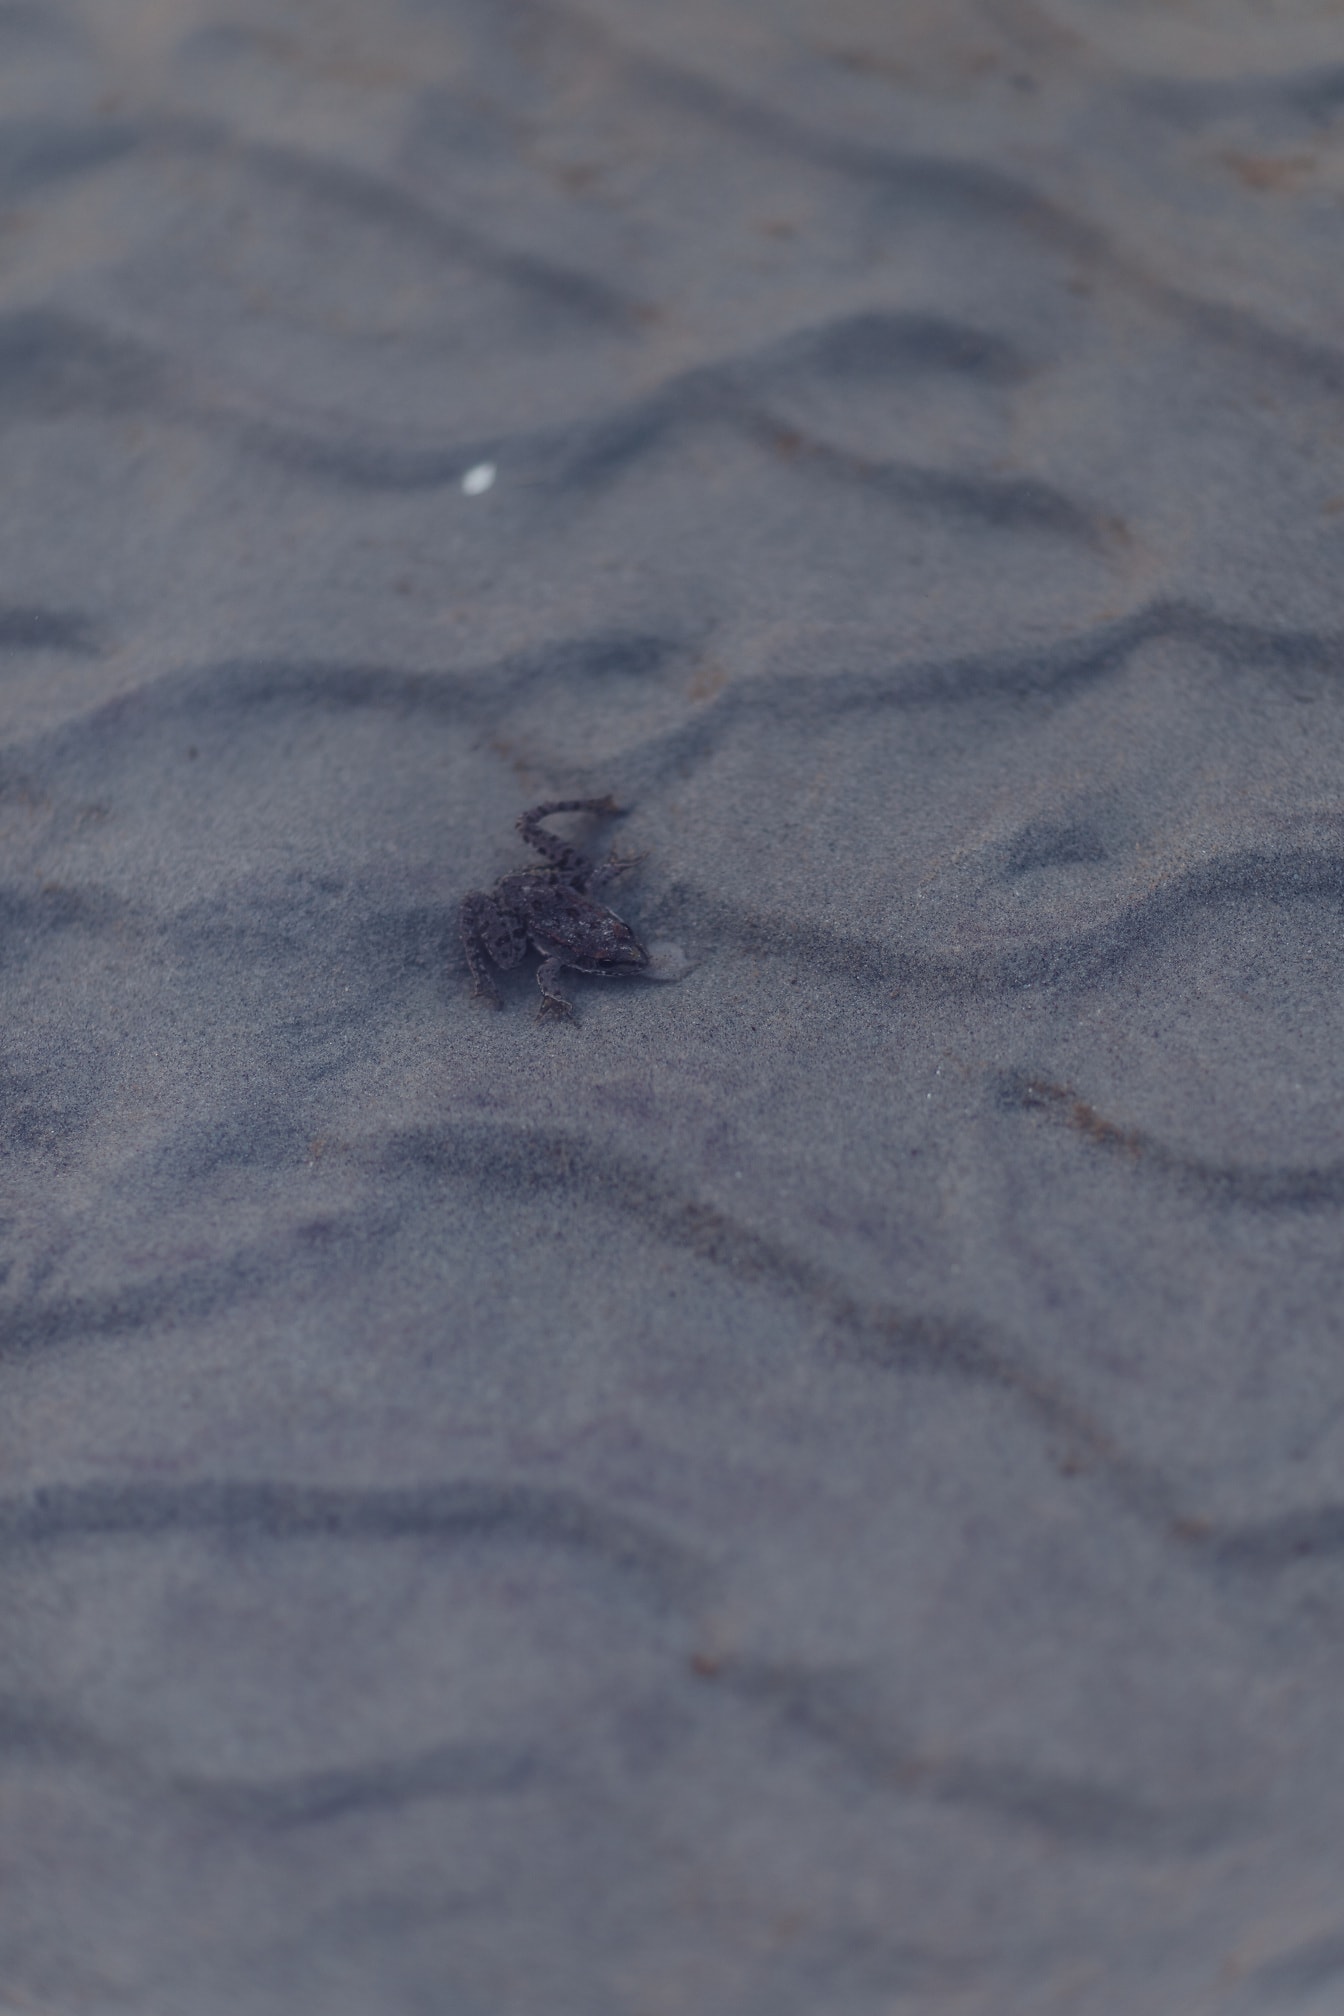 Kleine bruine kikker op zand onderwater